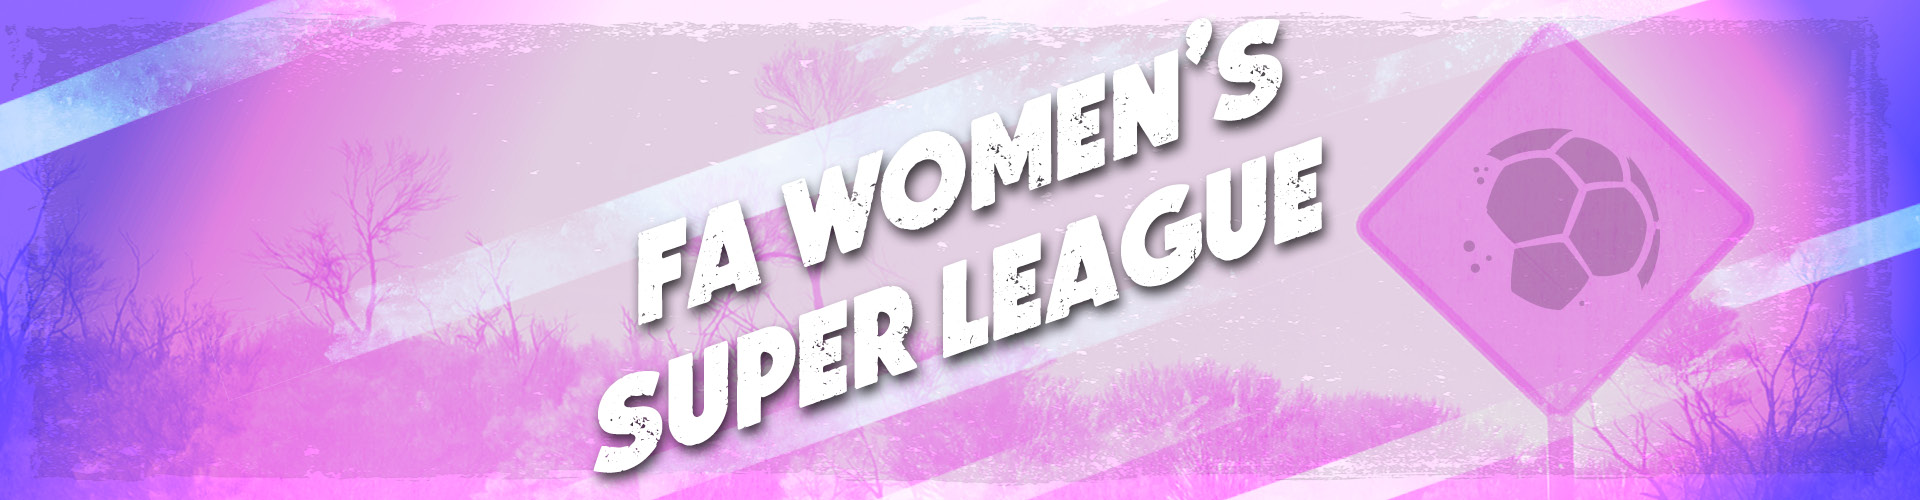 FA Women's Super League Football at Walkabout